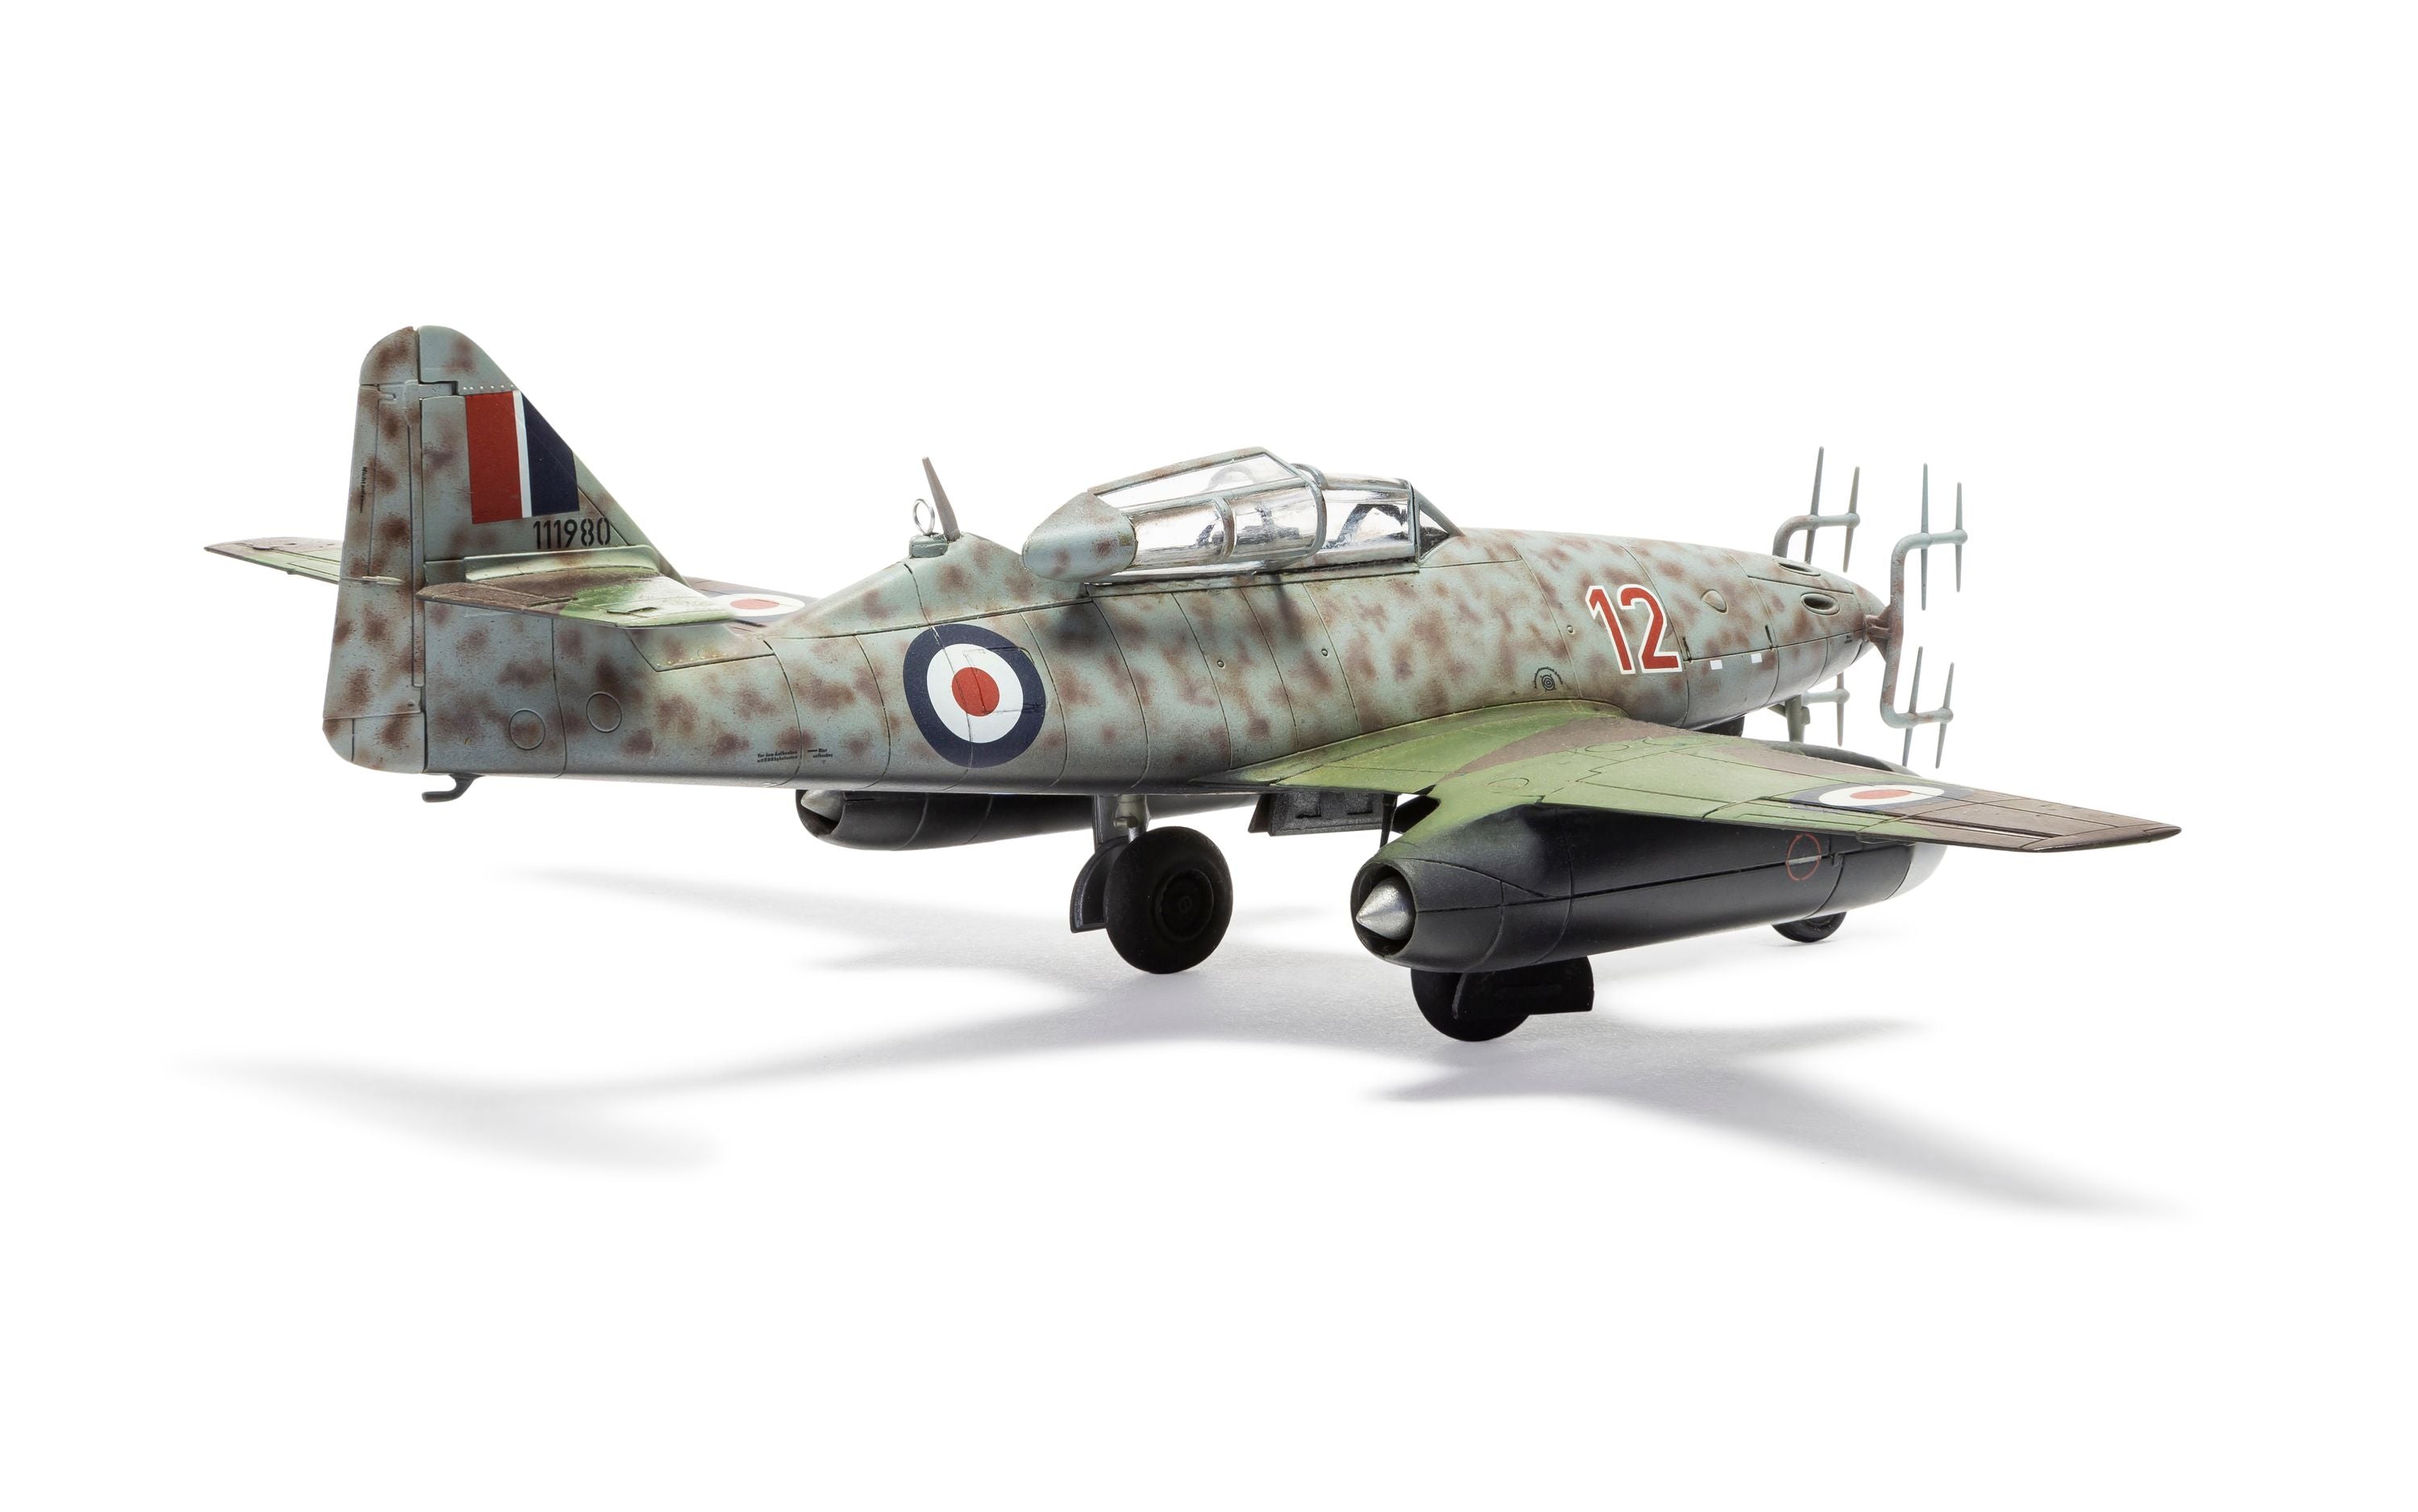 Messerschmitt Me262B-1a-U1 (1:72) - Loaded Dice Barry Vale of Glamorgan CF64 3HD